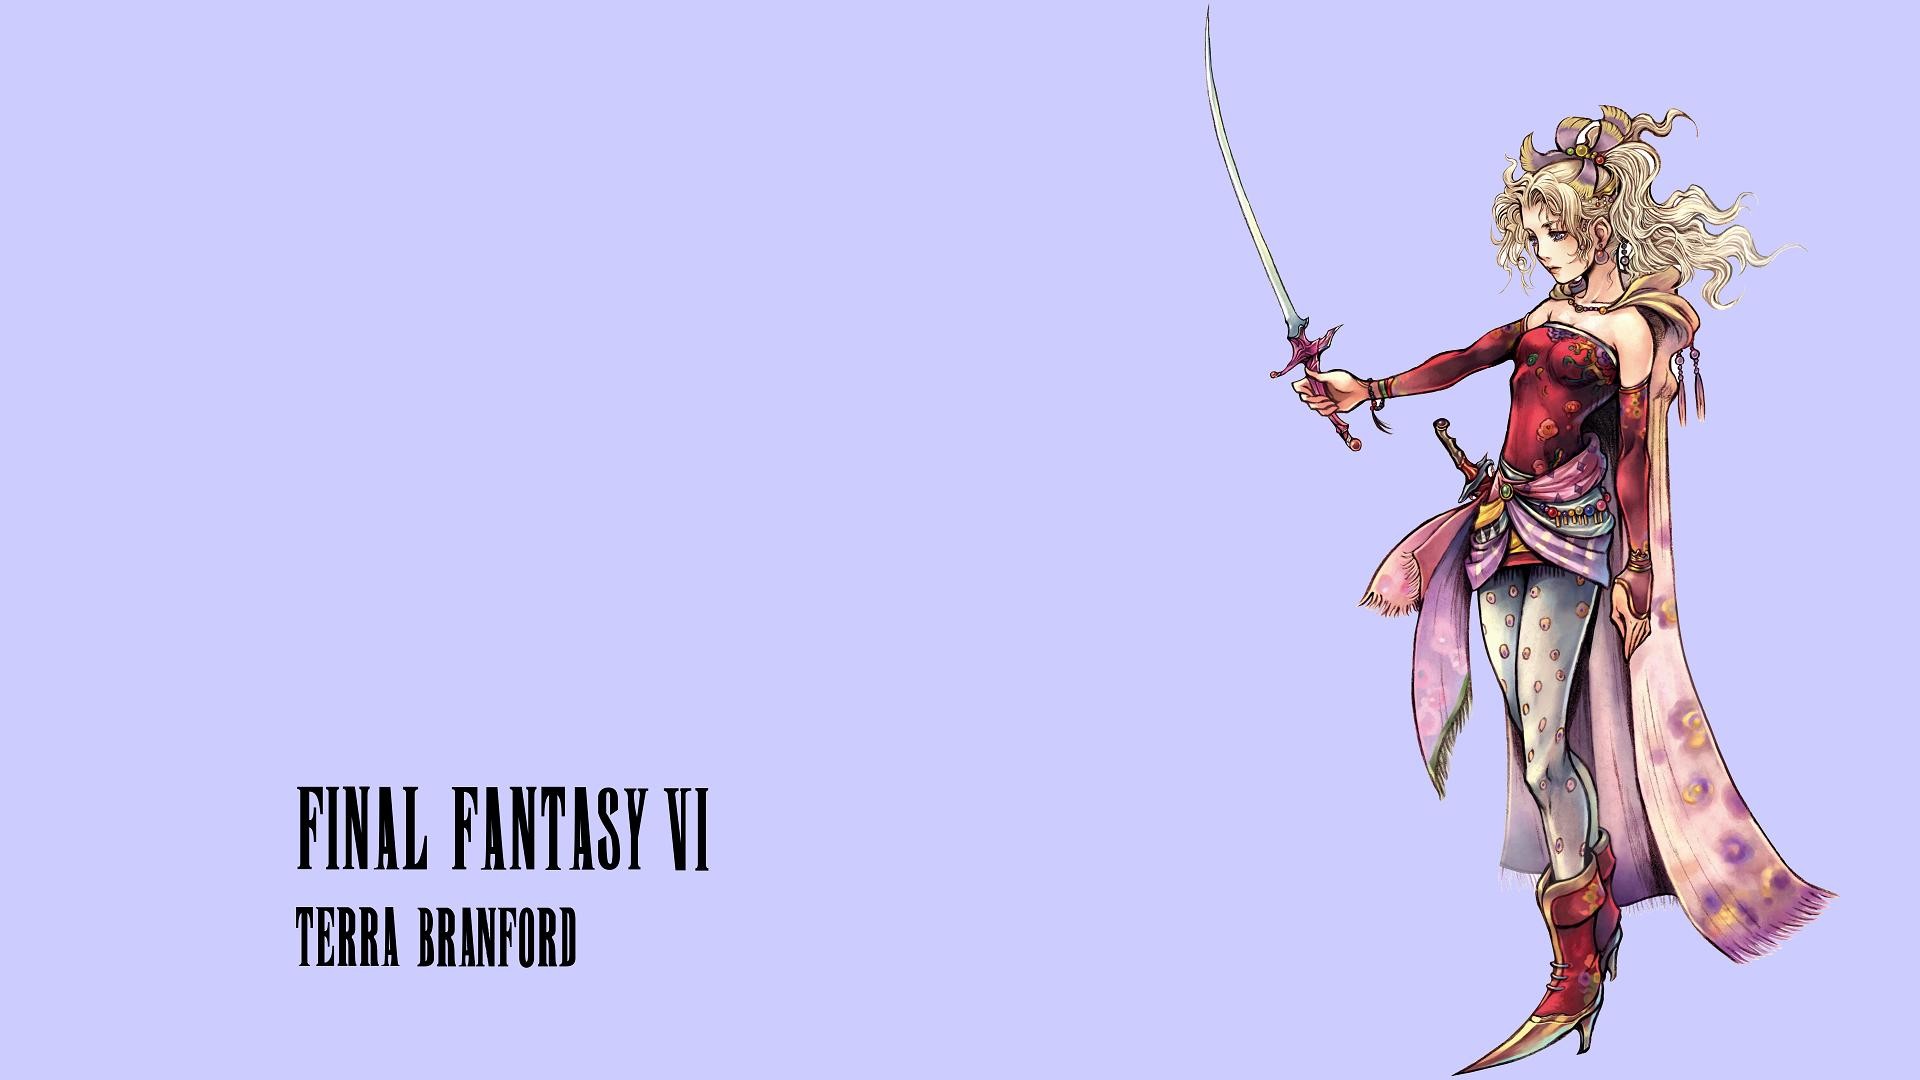 Terra Branford  Final Fantasy VI Game mobile wallpaper